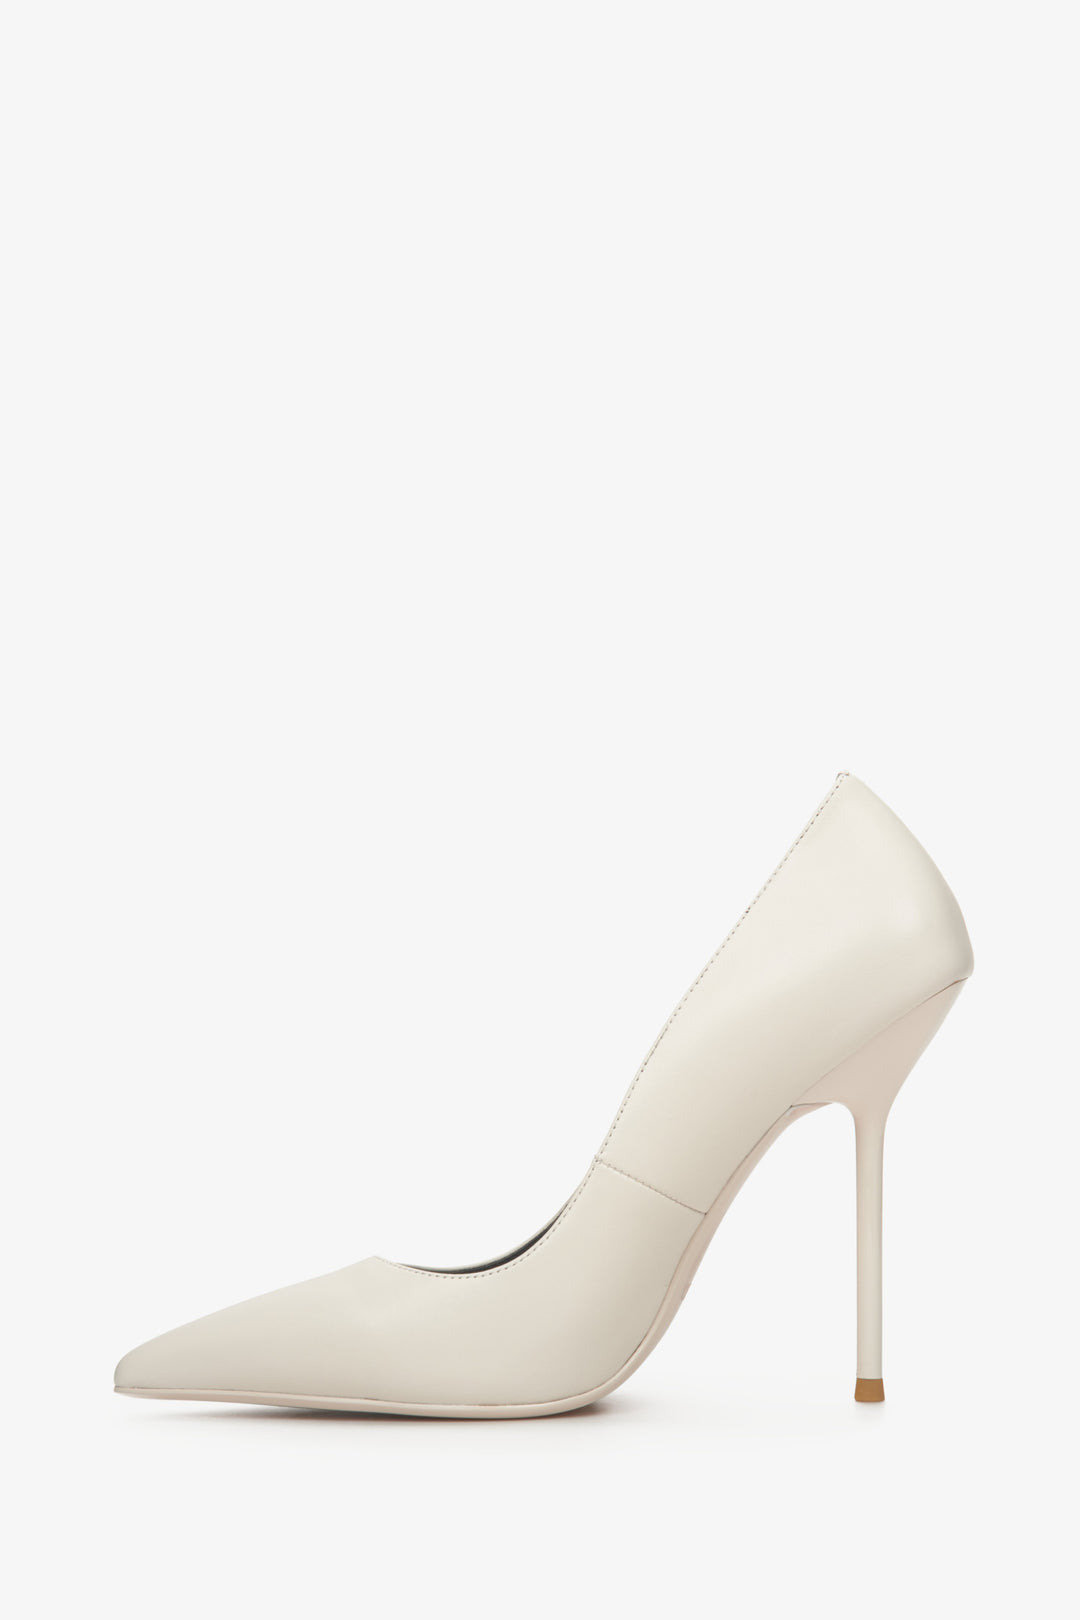 Women's white leather stiletto heels Estro - shoe profile.